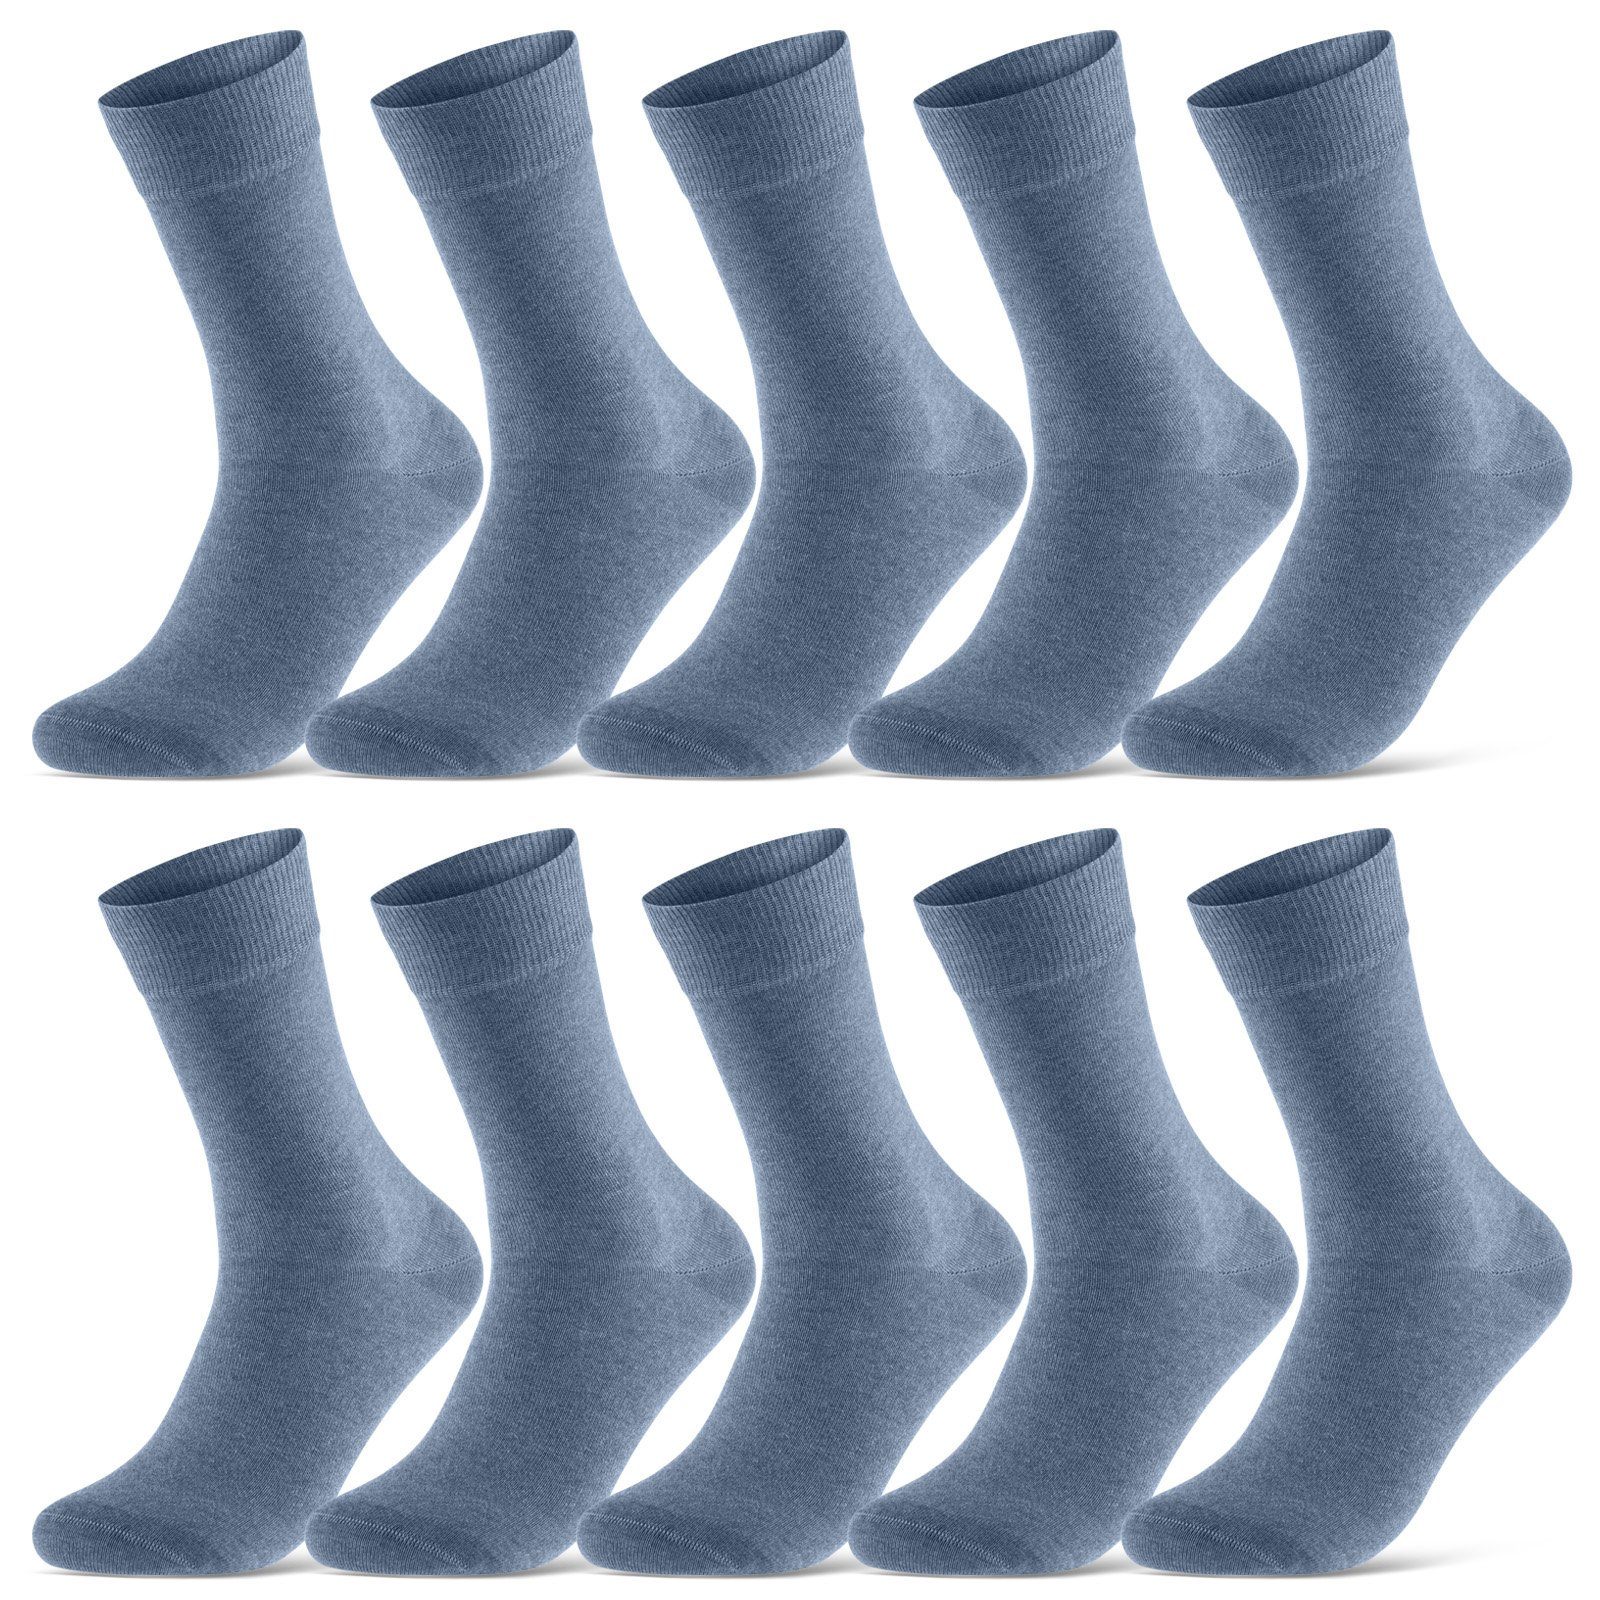 sockenkauf24 Socken 10 Paar Damen & Herren Socken Business Socken Baumwolle (Jeans, 39-42) mit Komfortbund (Basicline) - 70201T WP